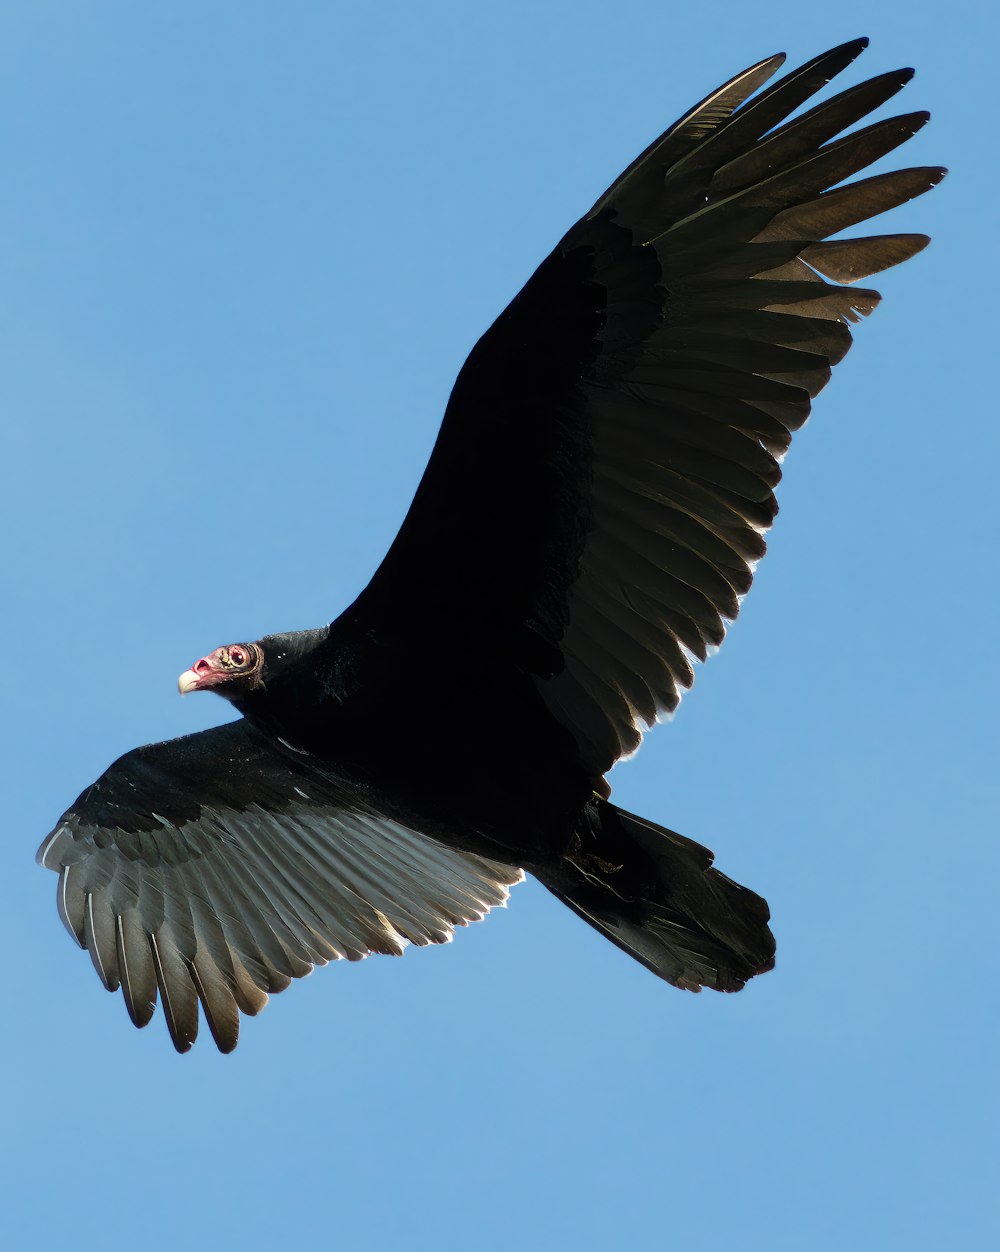 a large black bird flying through a blue sky